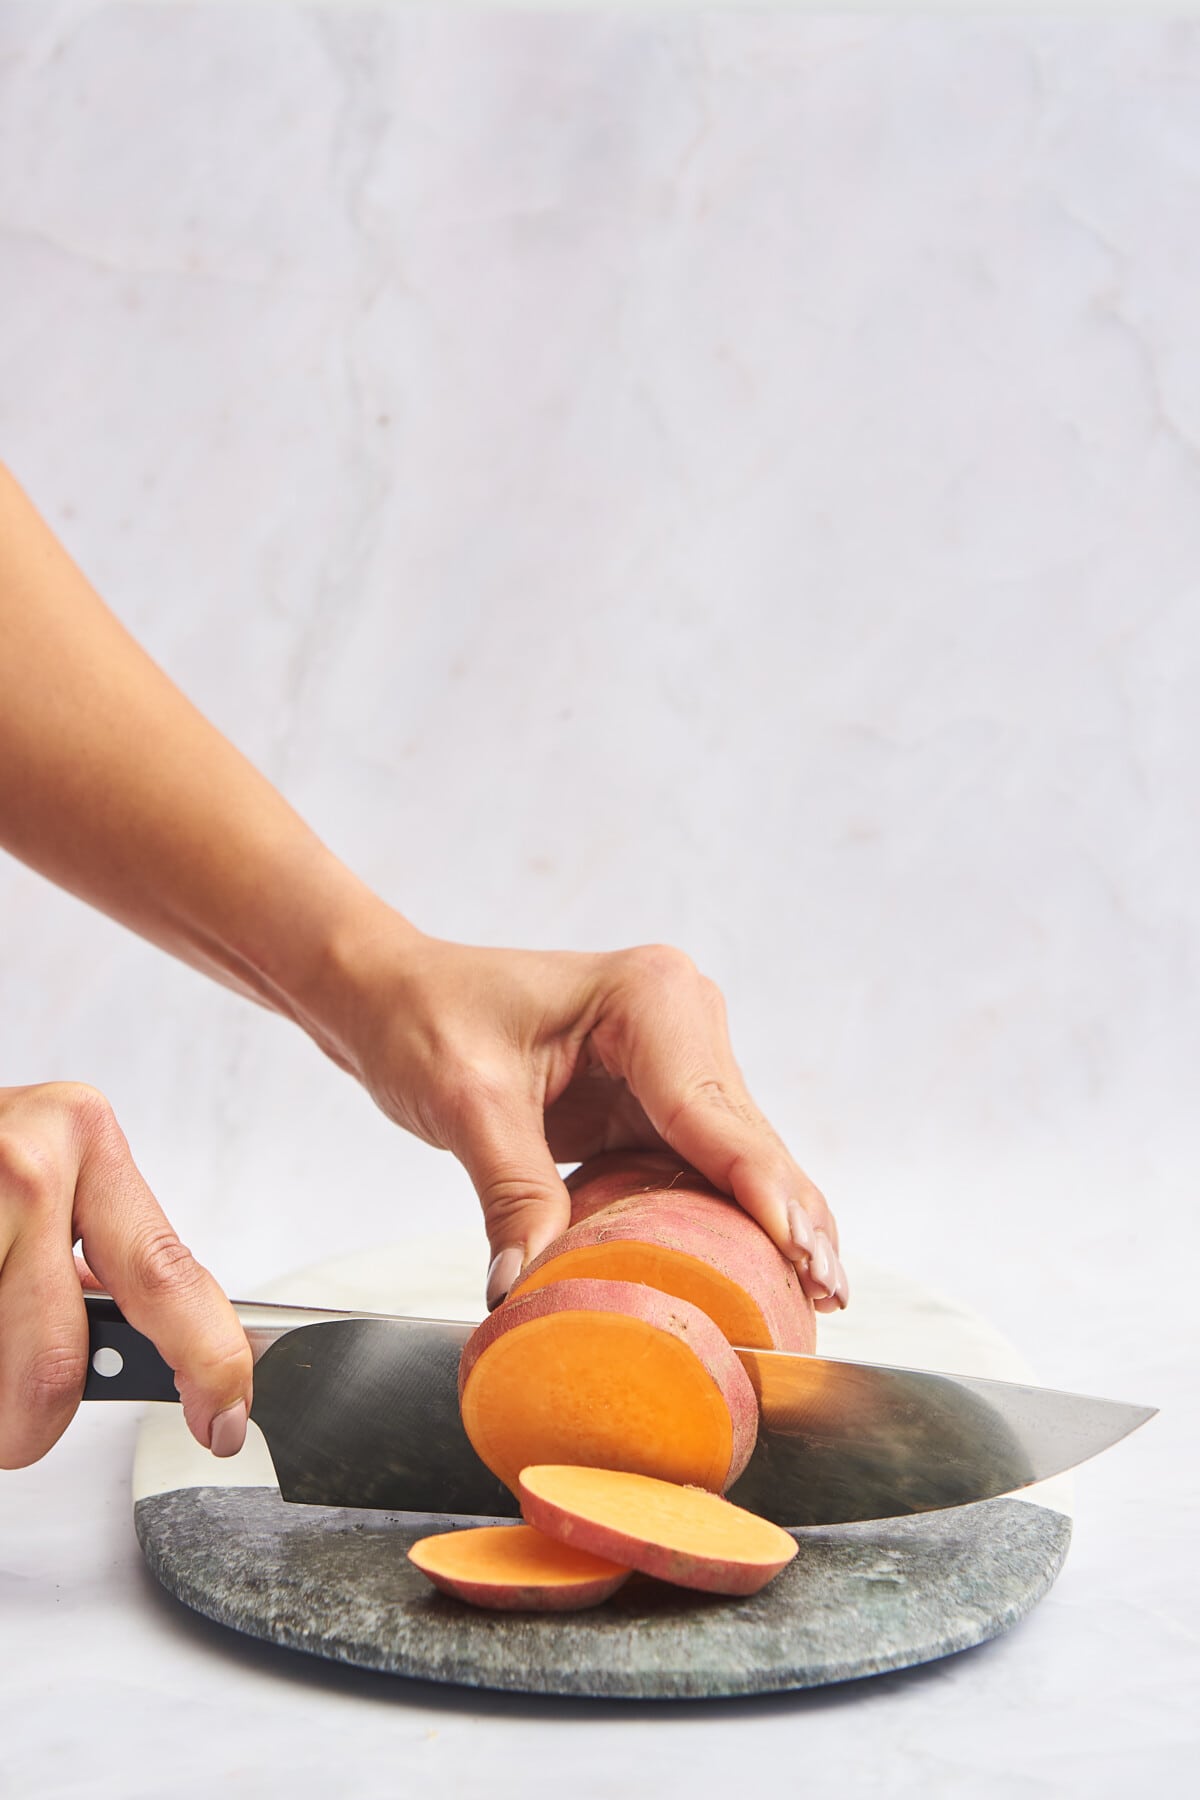 How to Cut Sweet Potatoes (4 Ways) - Food Dolls